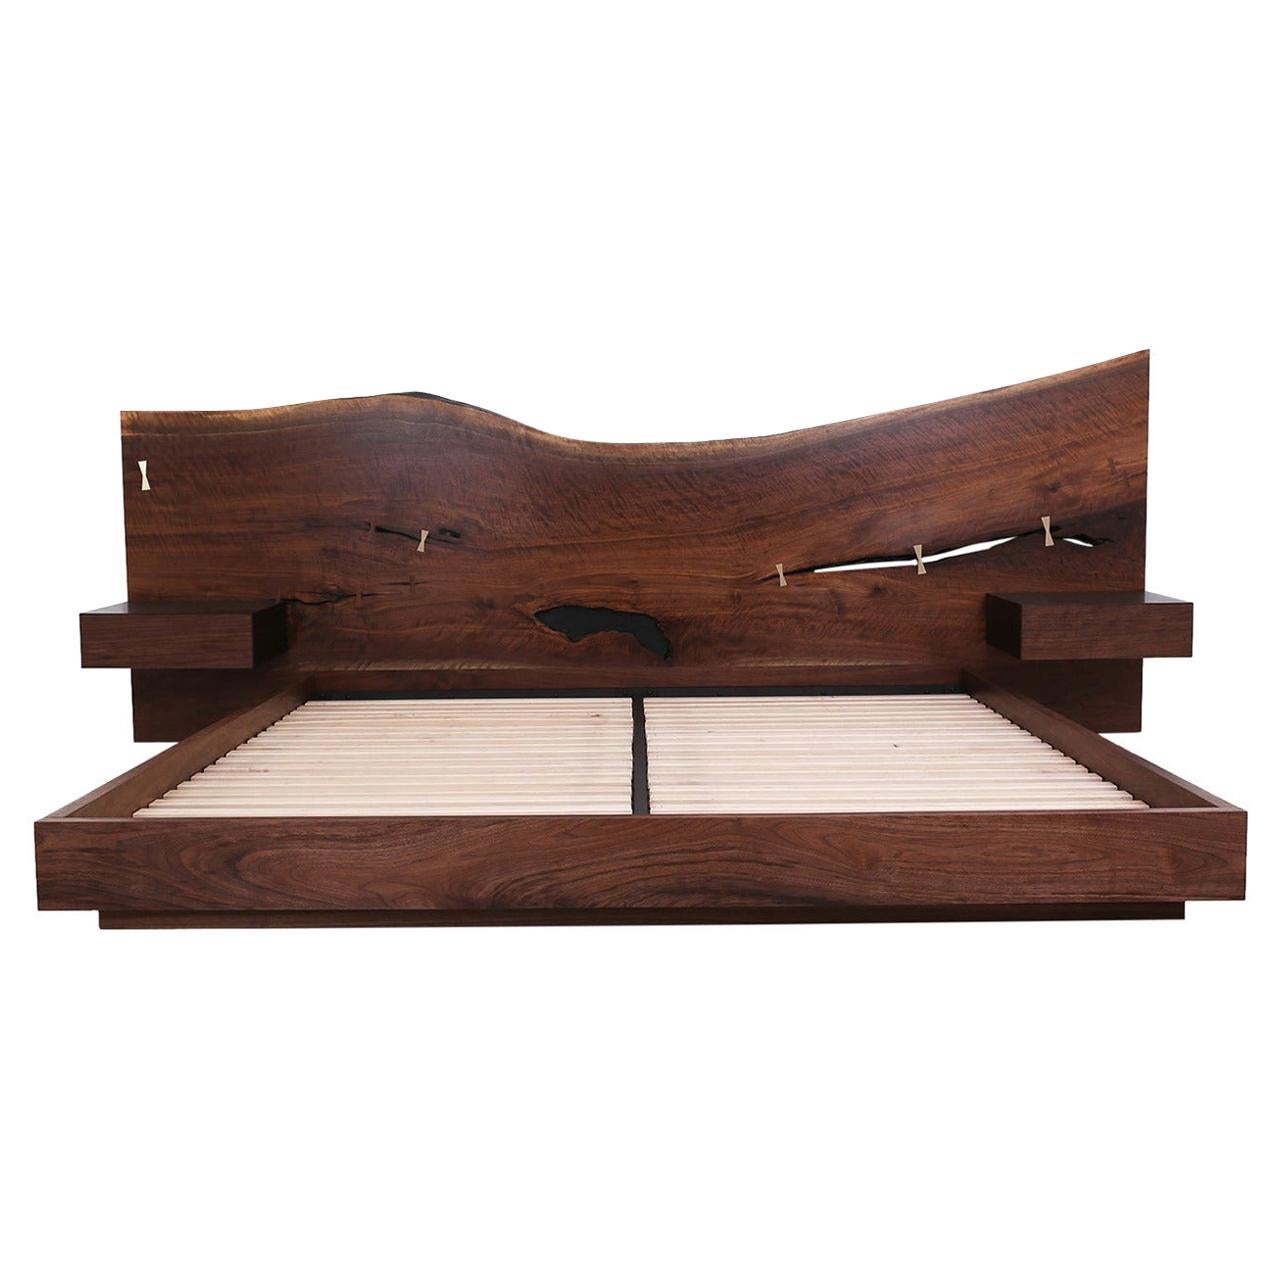 St. Pierre King Bed by Uhuru, Walnut Slab Headboard and Built in Nightstands For Sale